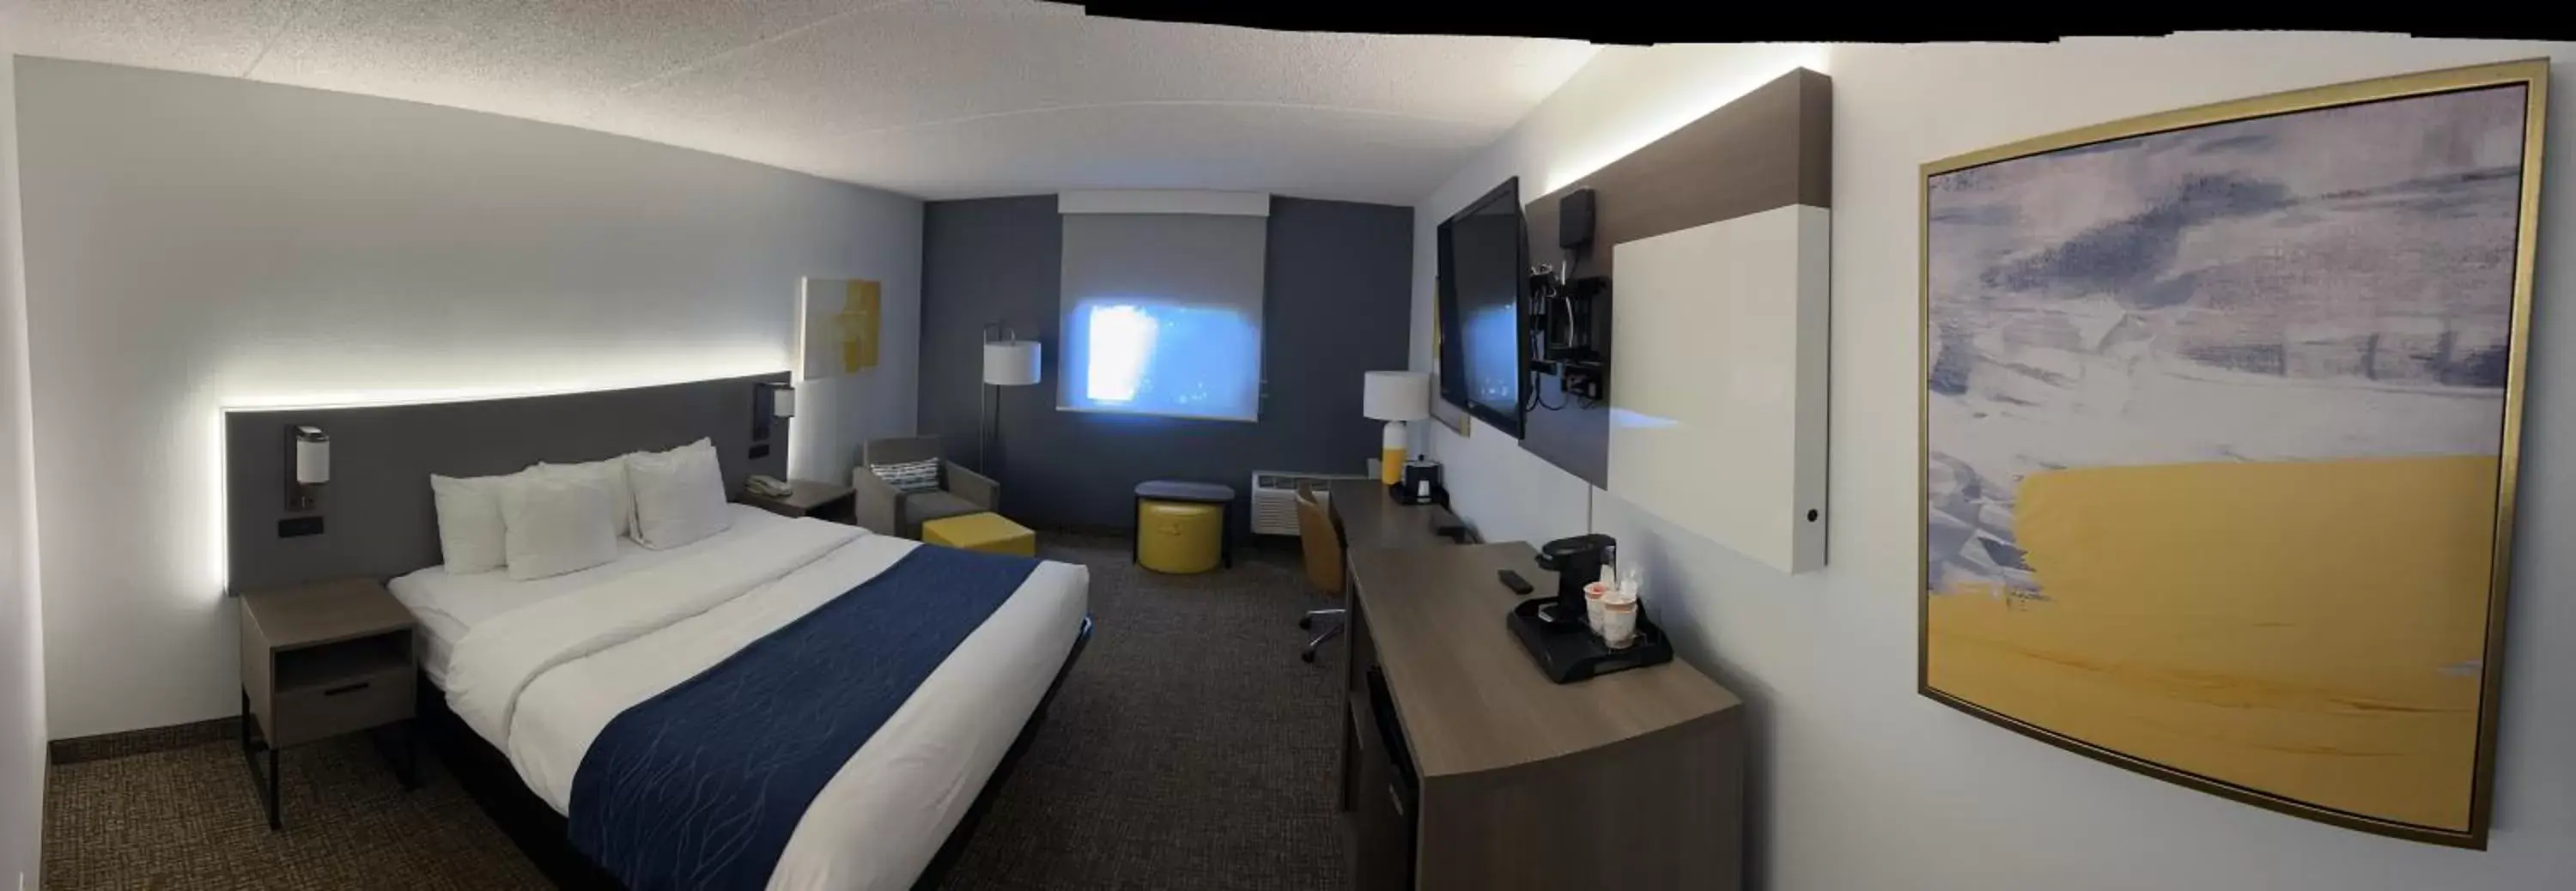 Bedroom in Comfort Inn Las Vegas New Mexico